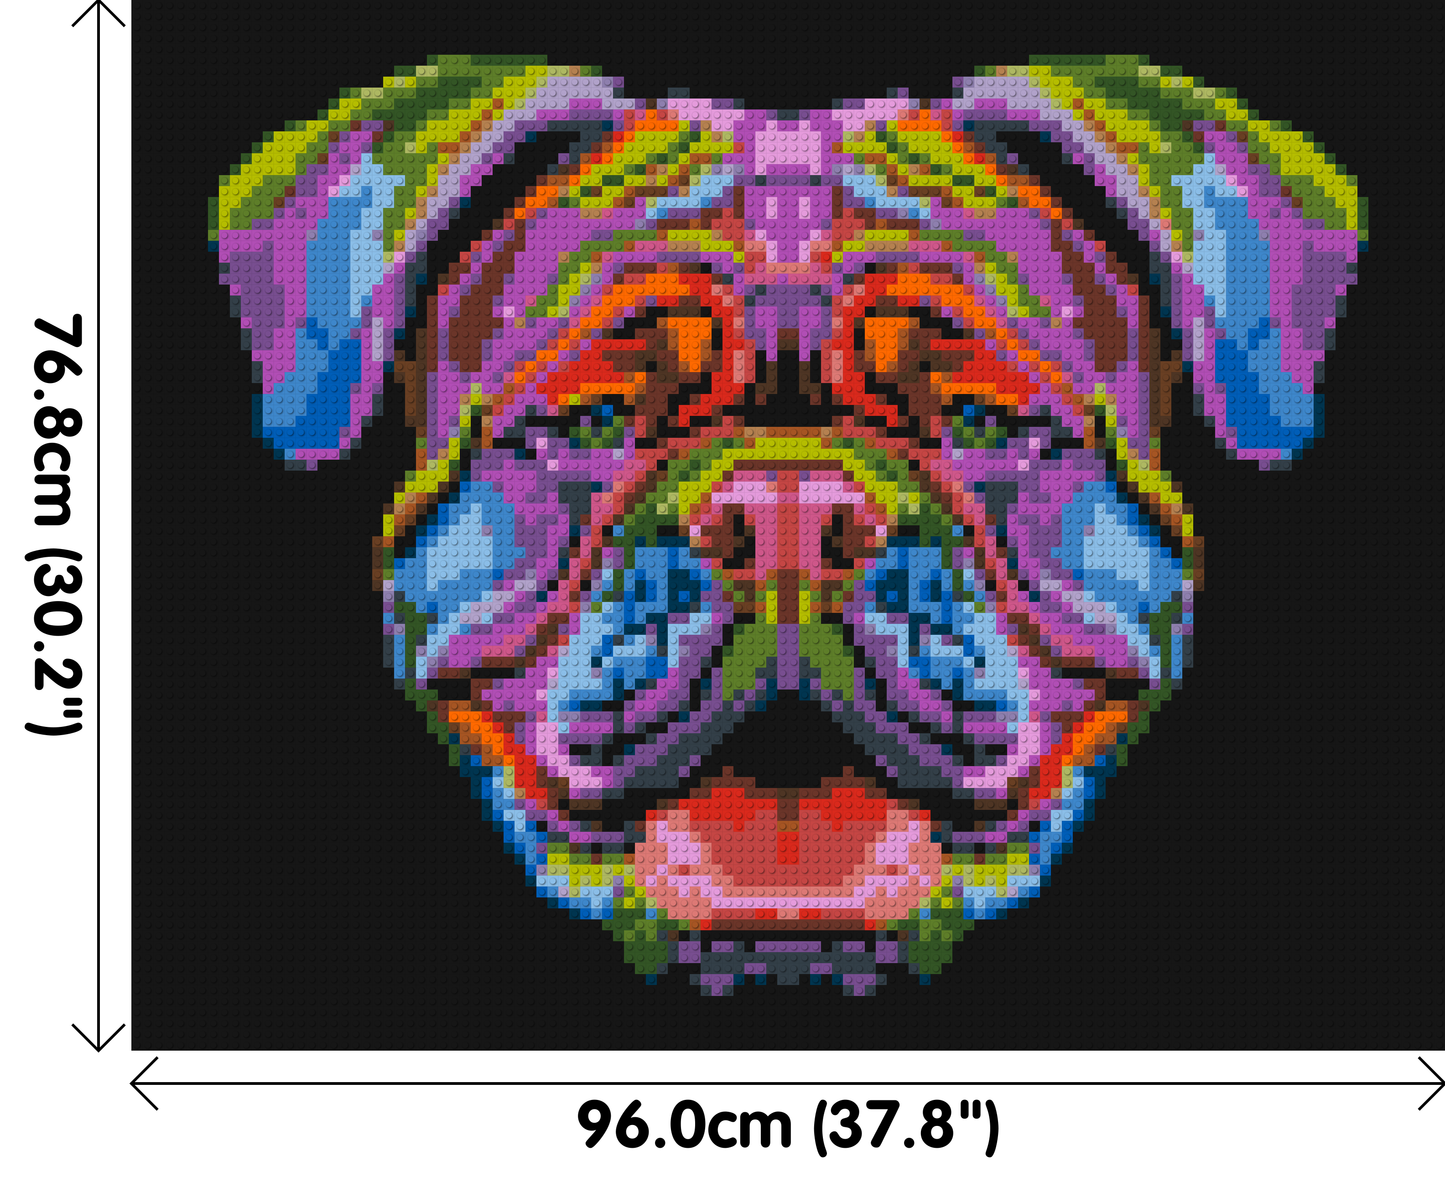 British Bulldog Colourful Pop Art - Brick Art Mosaic Kit